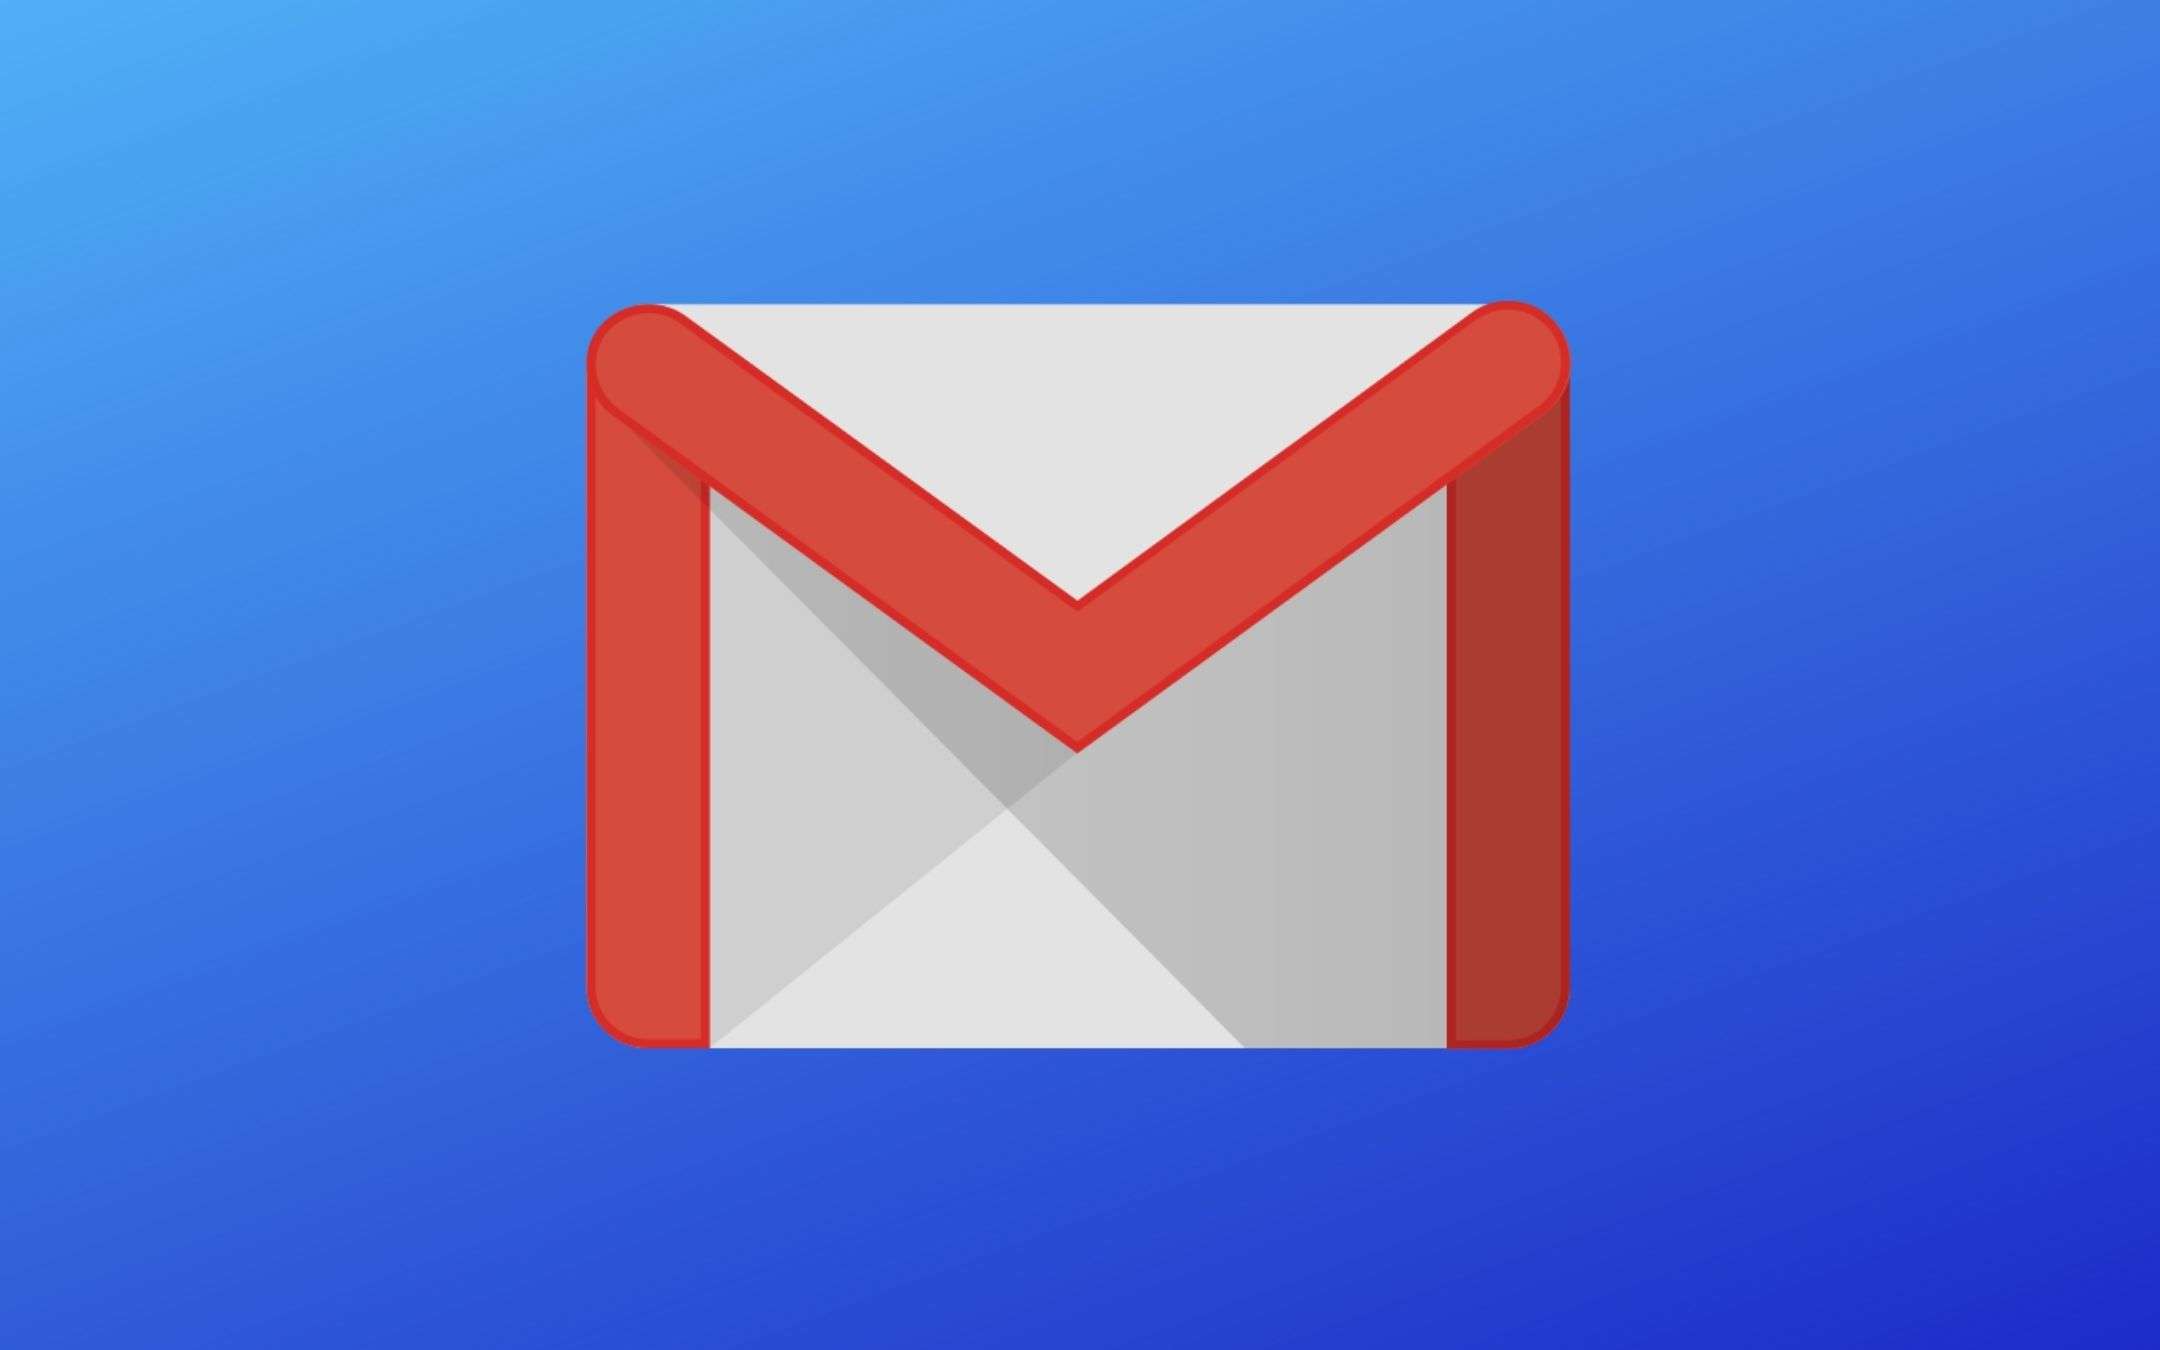 P gmail com. Gmail картинка. Gmail почта. Логотип gmail почты.